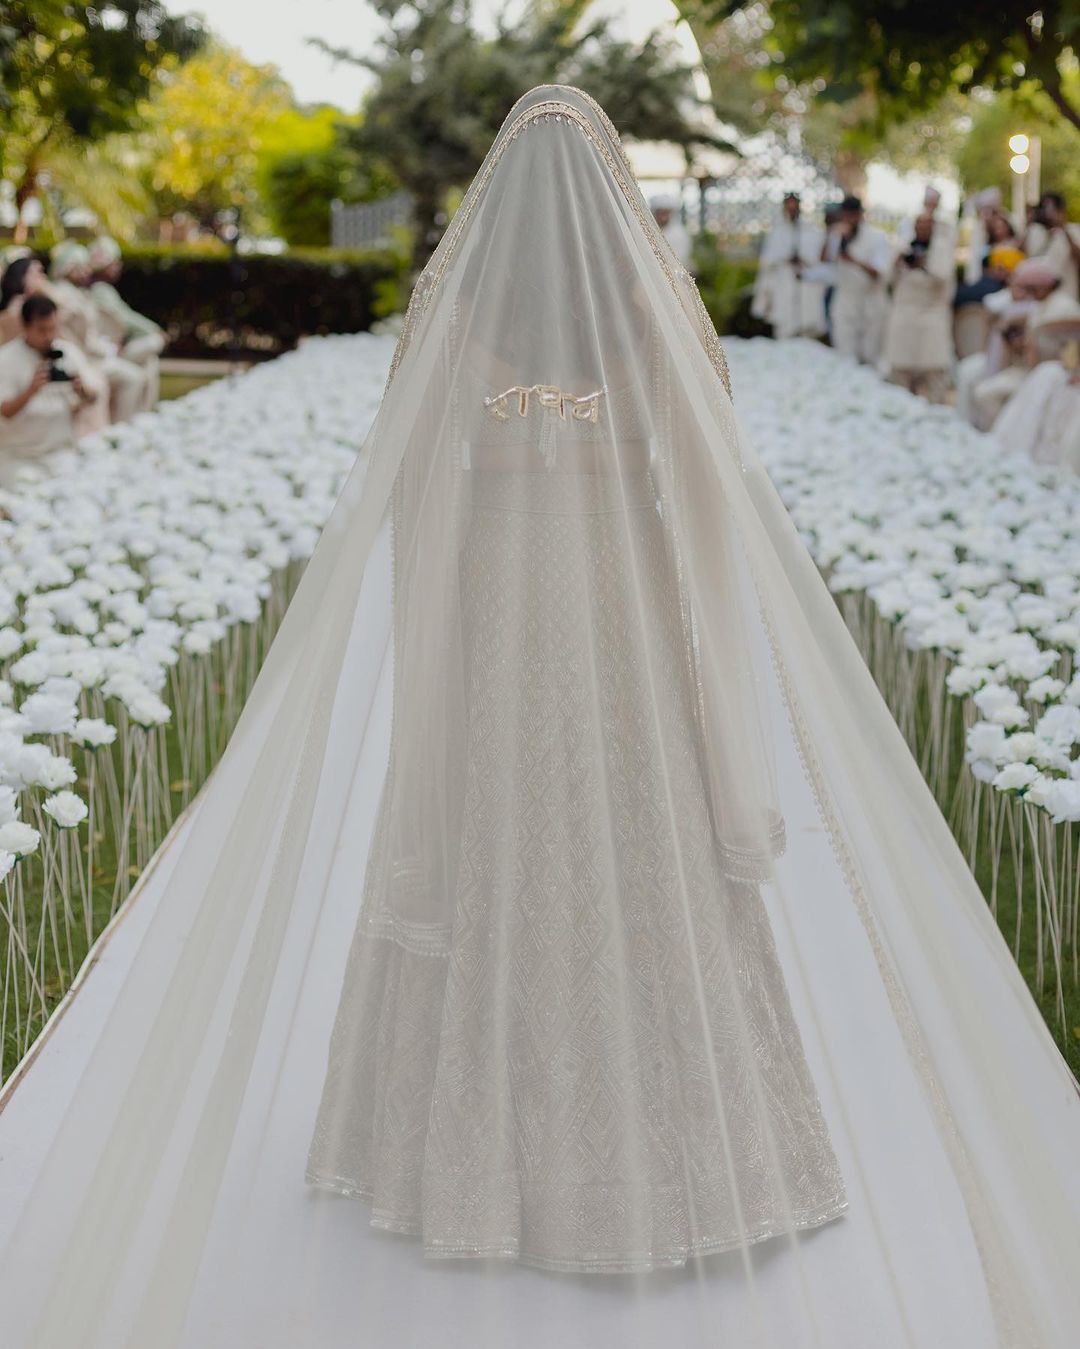 Parineeti Chopra's wedding veil